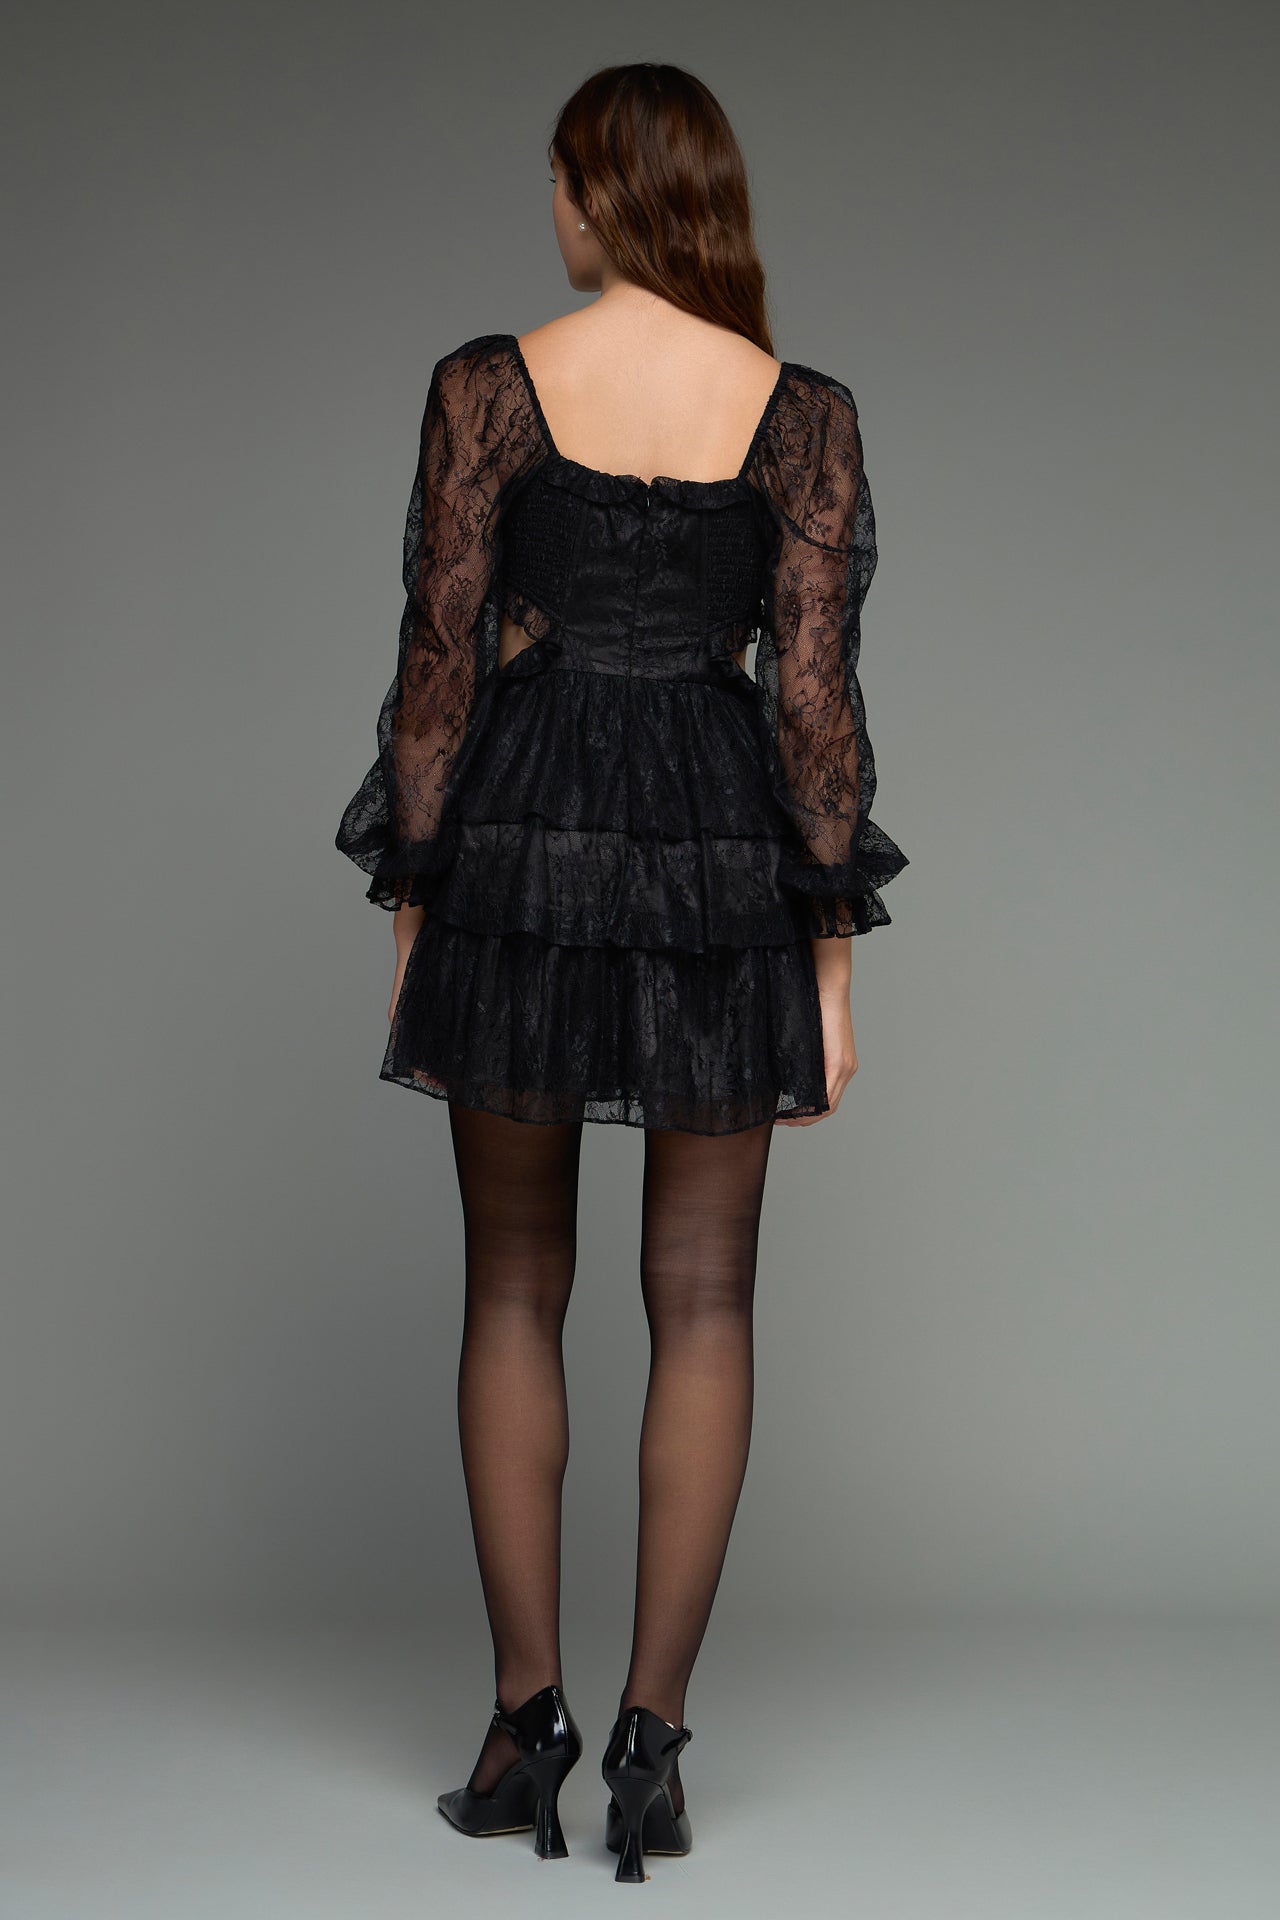 ENDLESS ROSE - Premium Lace Mini Dress - DRESSES available at Objectrare